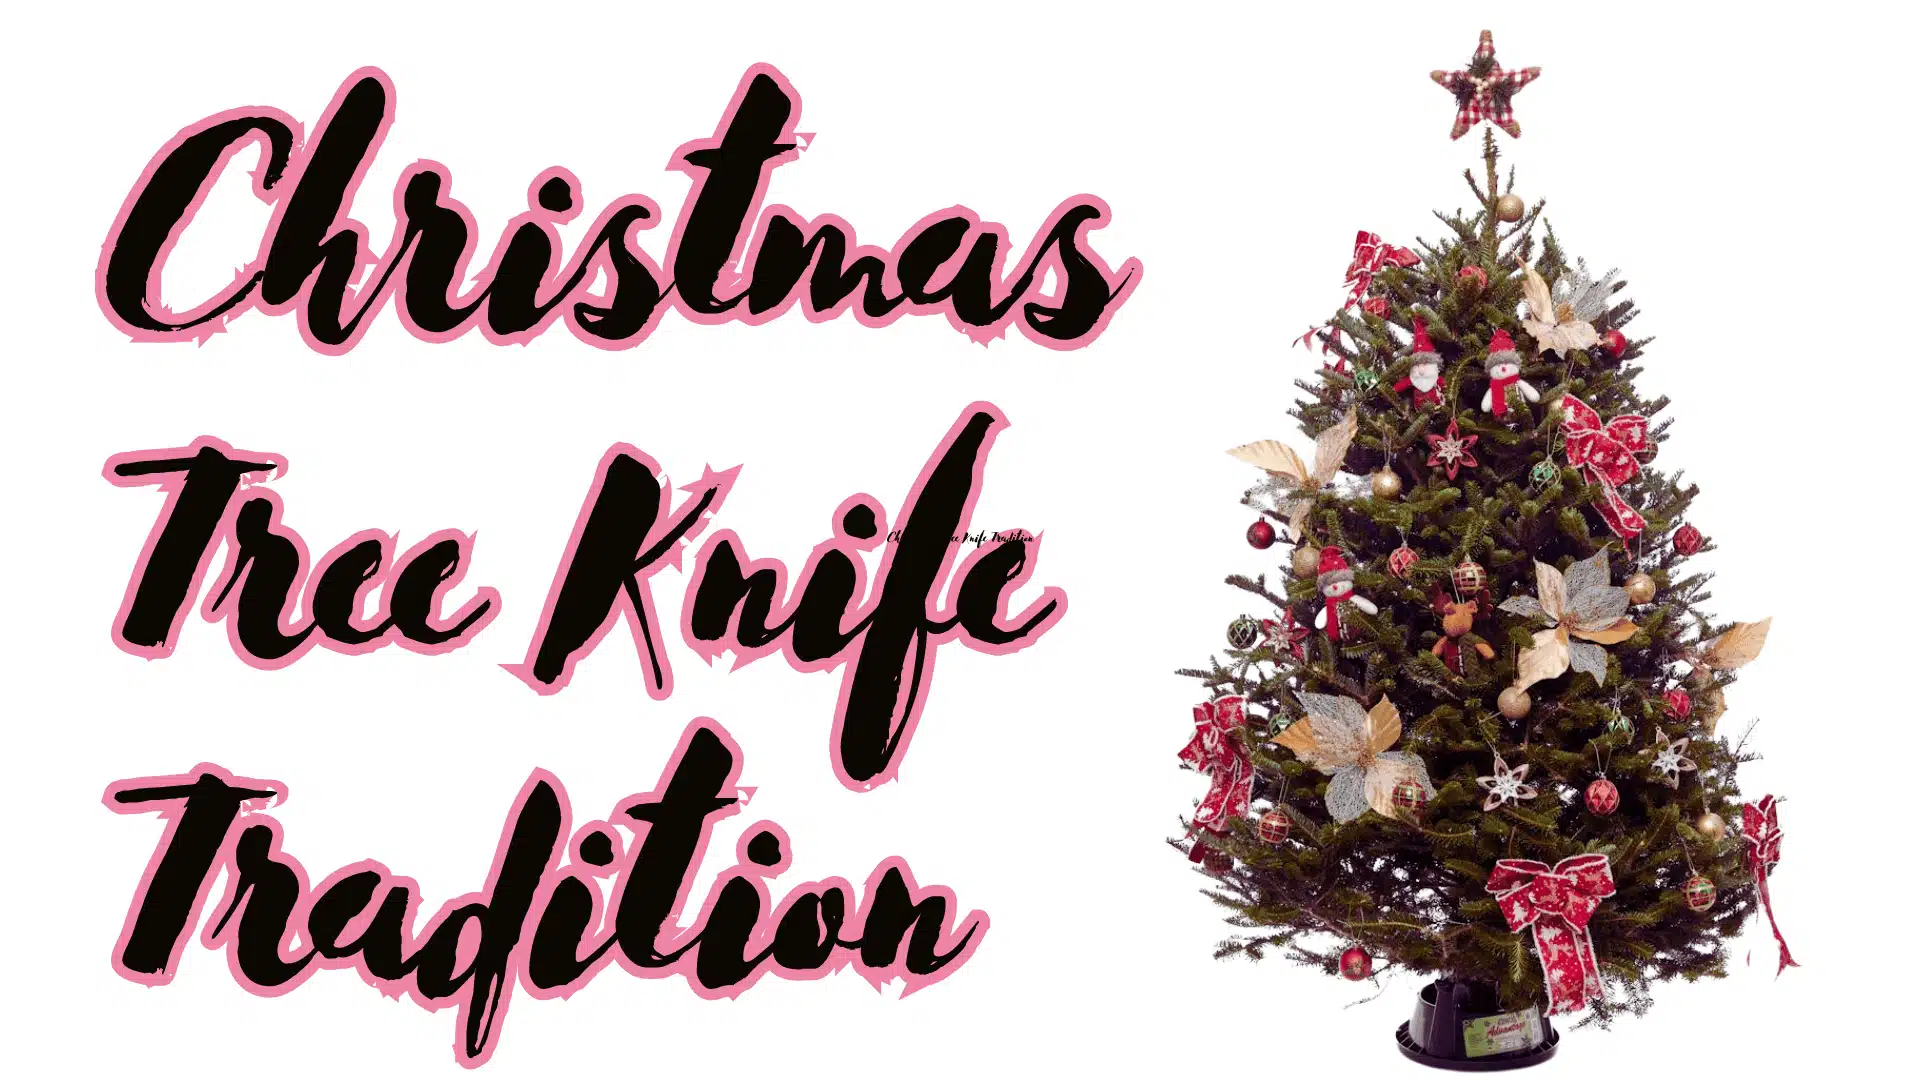 Christmas Tree Knife Tradition